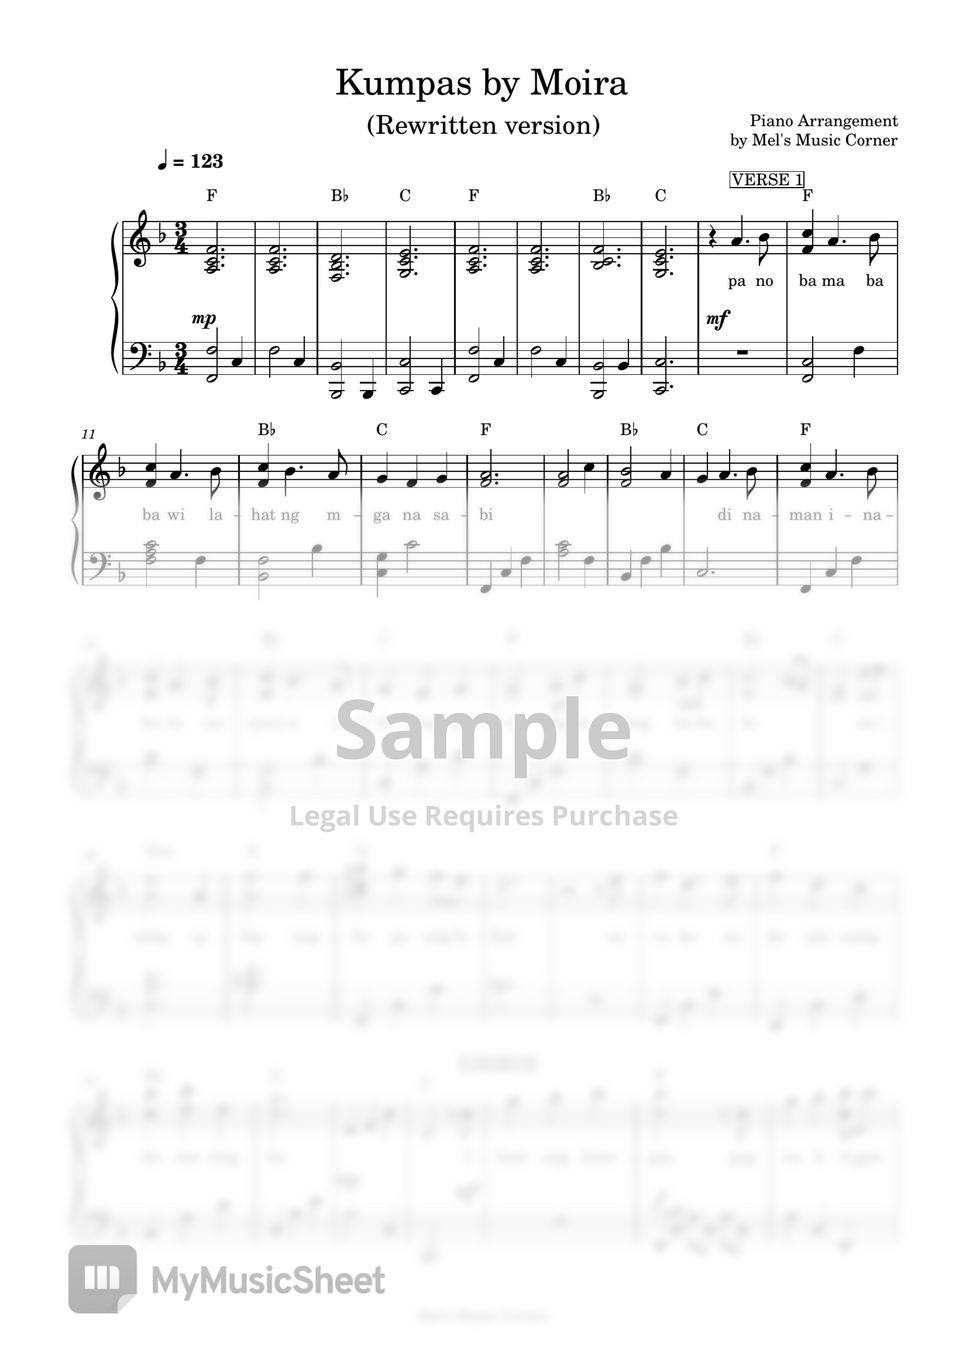 Moira dela Torre - Kumpas: REWRITTEN piano sheet music by Mel's Music Corner